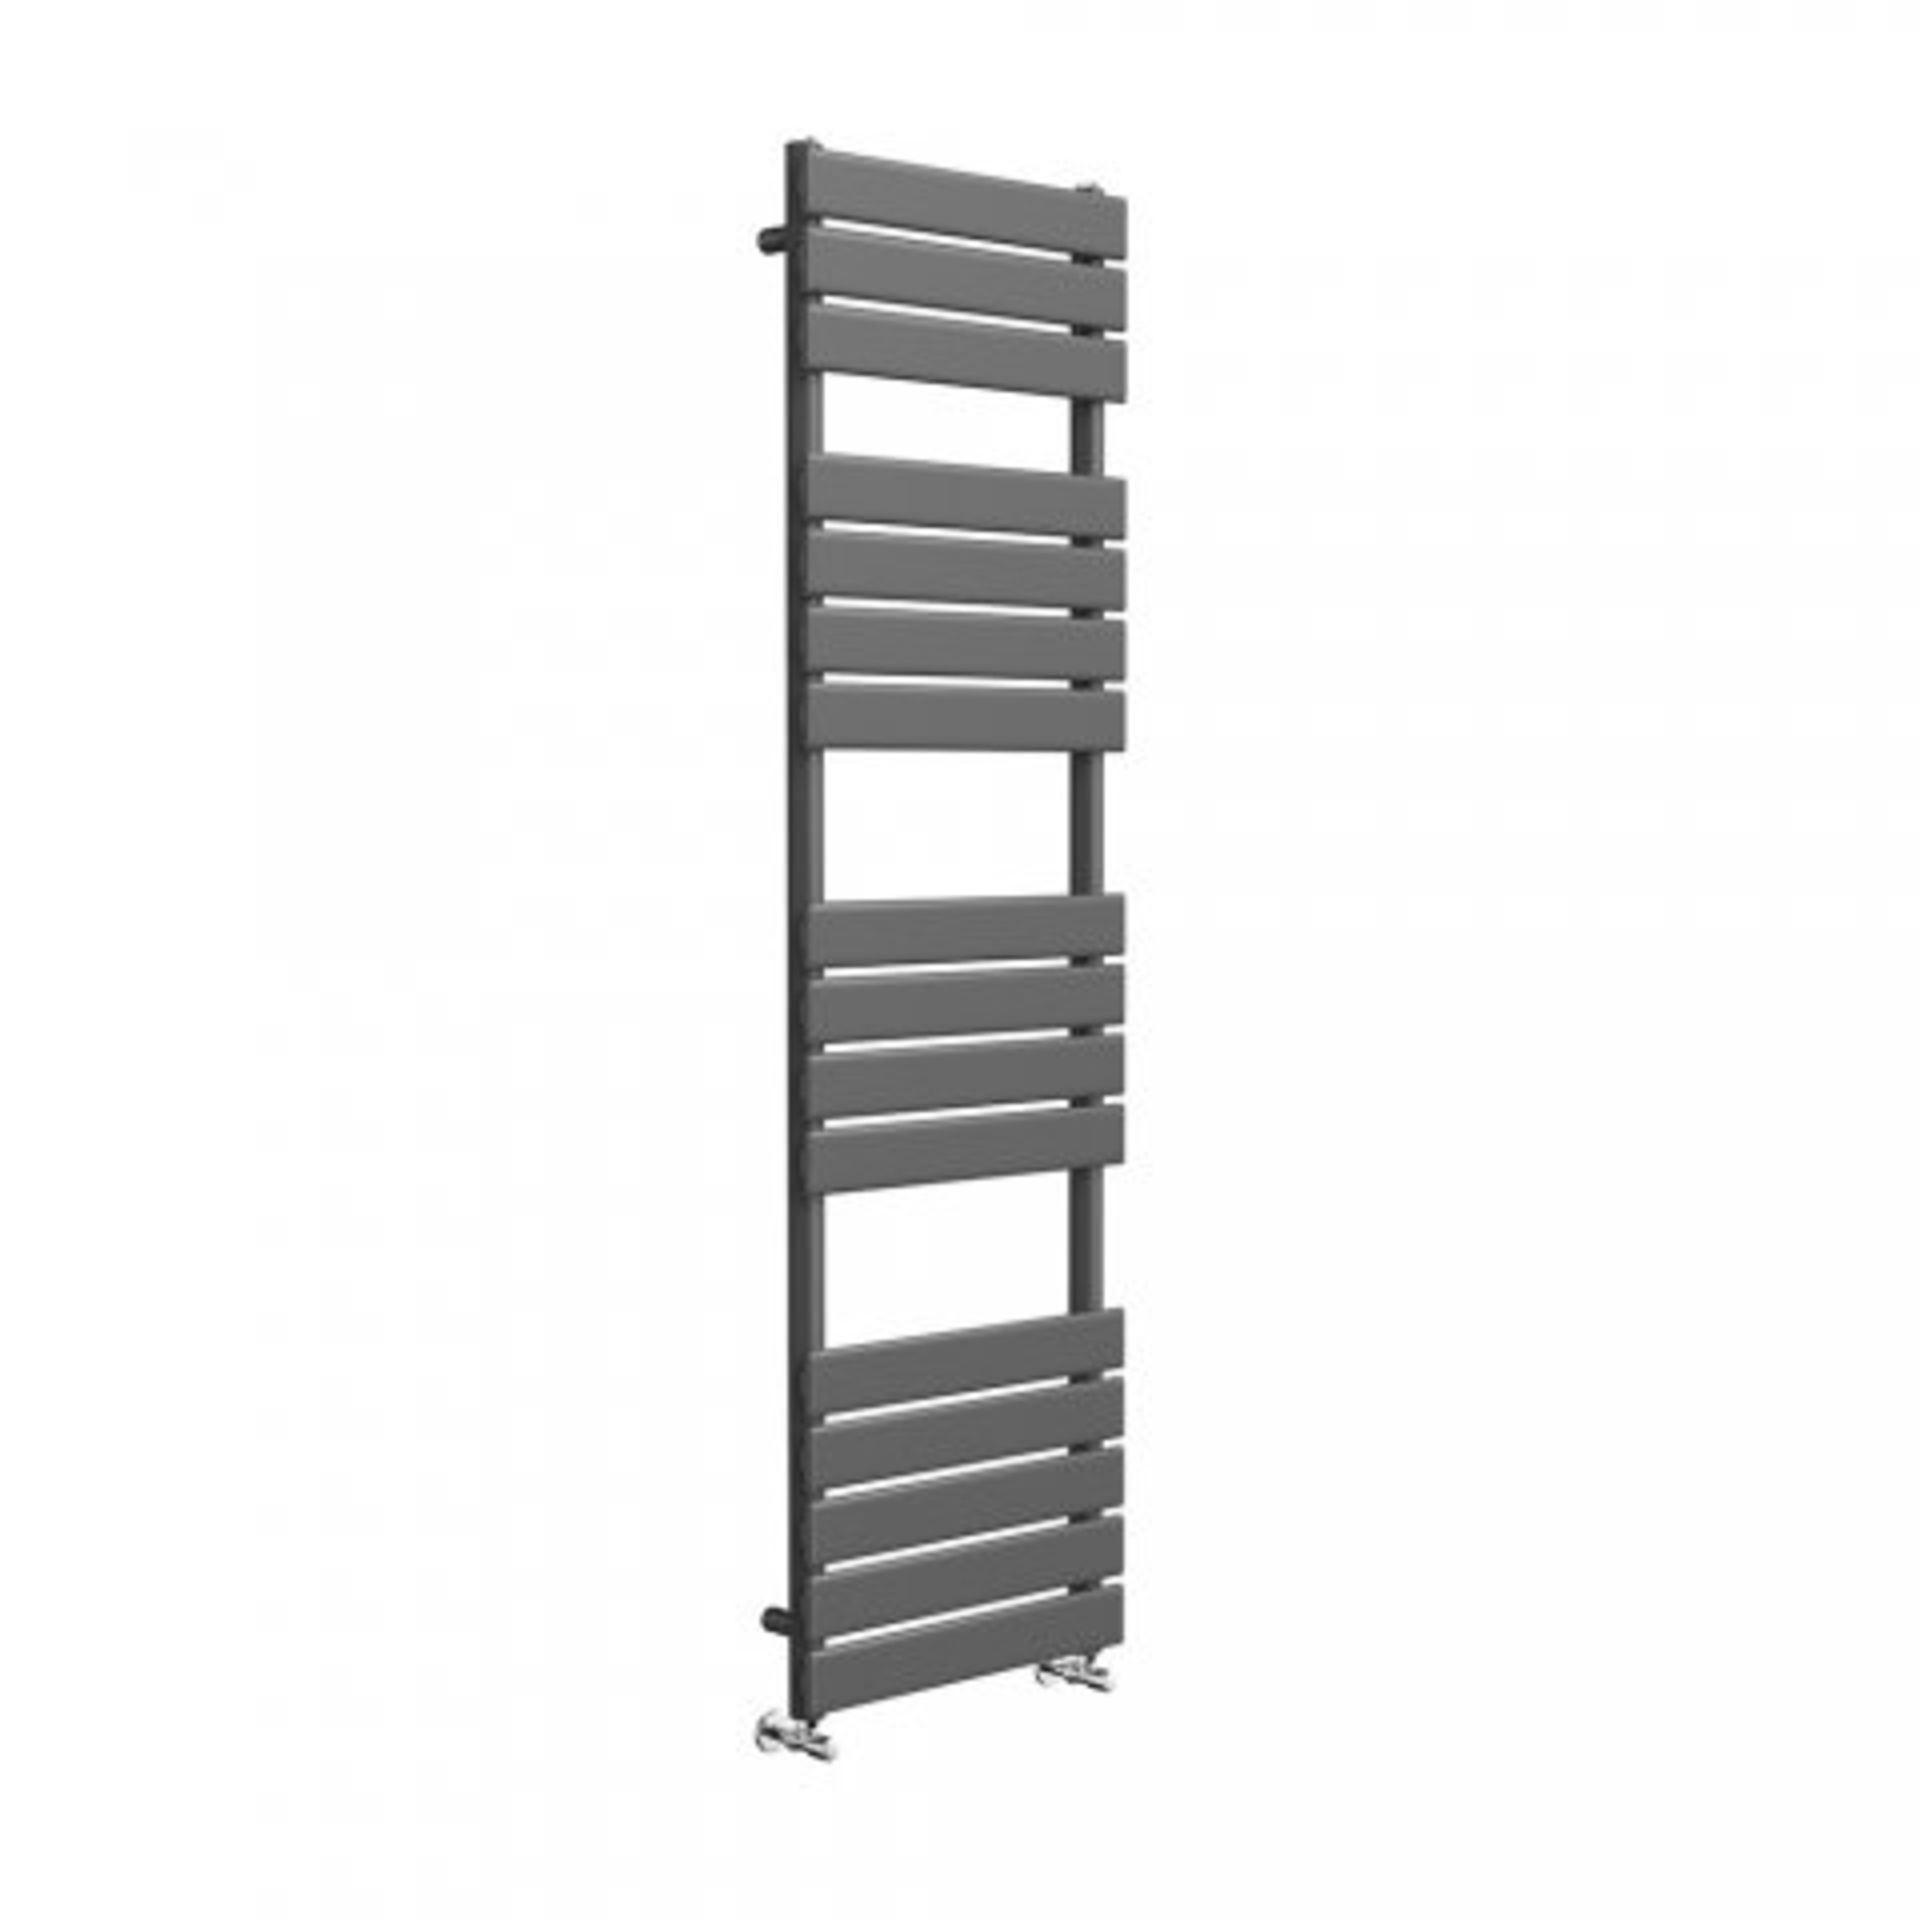 (39) 1600x450mm Anthracite Flat Panel Ladder Towel Radiator - Francis Range. RRP £424.99. - Image 2 of 3